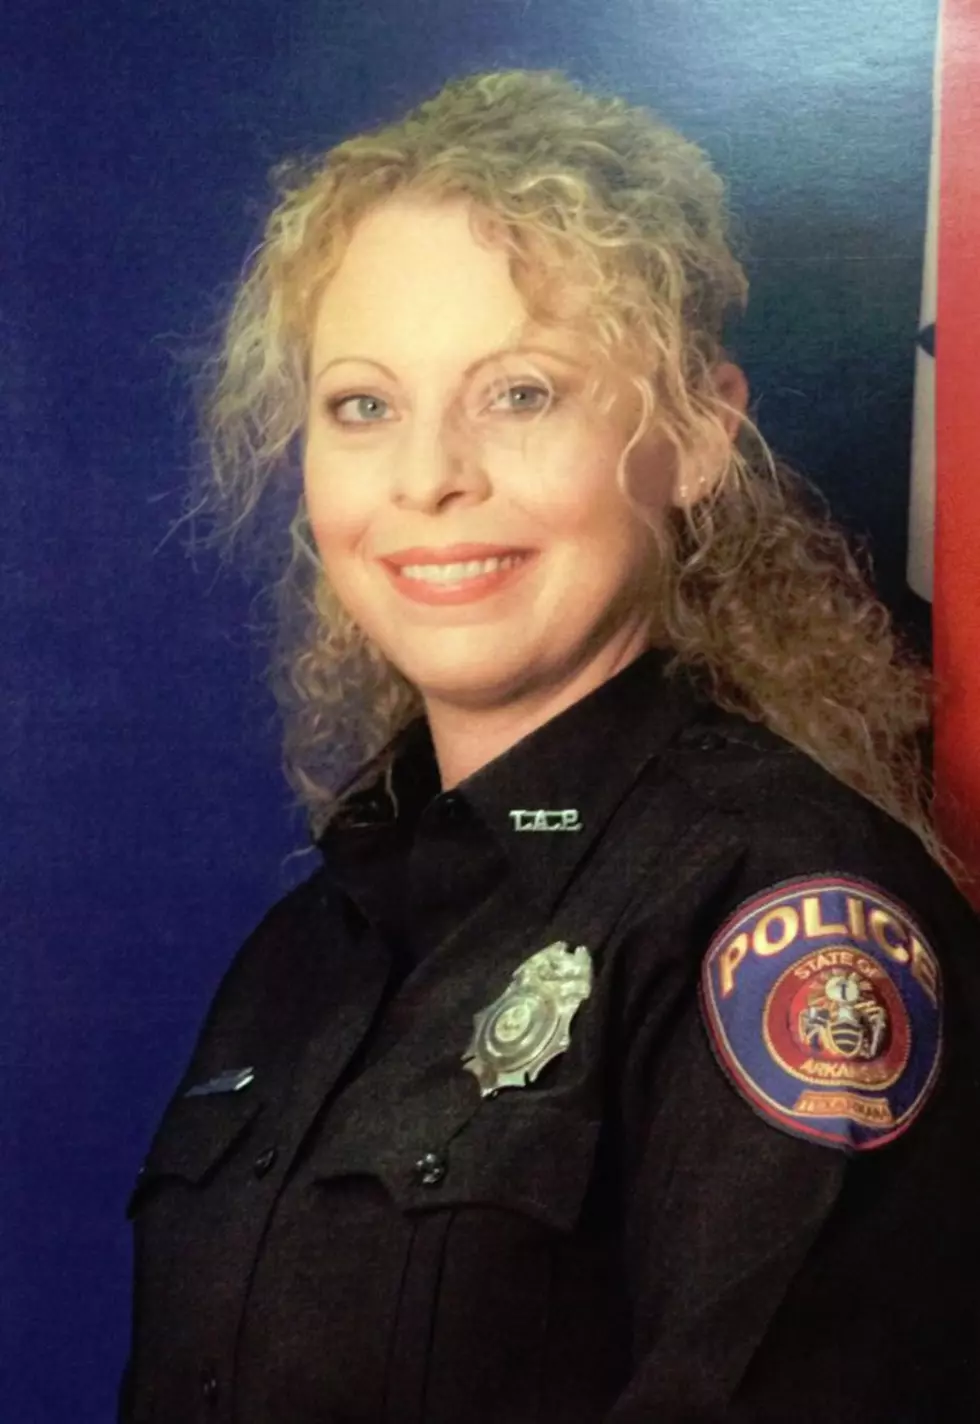 Texarkana Arkansas Police Announces Officer of The Quarter